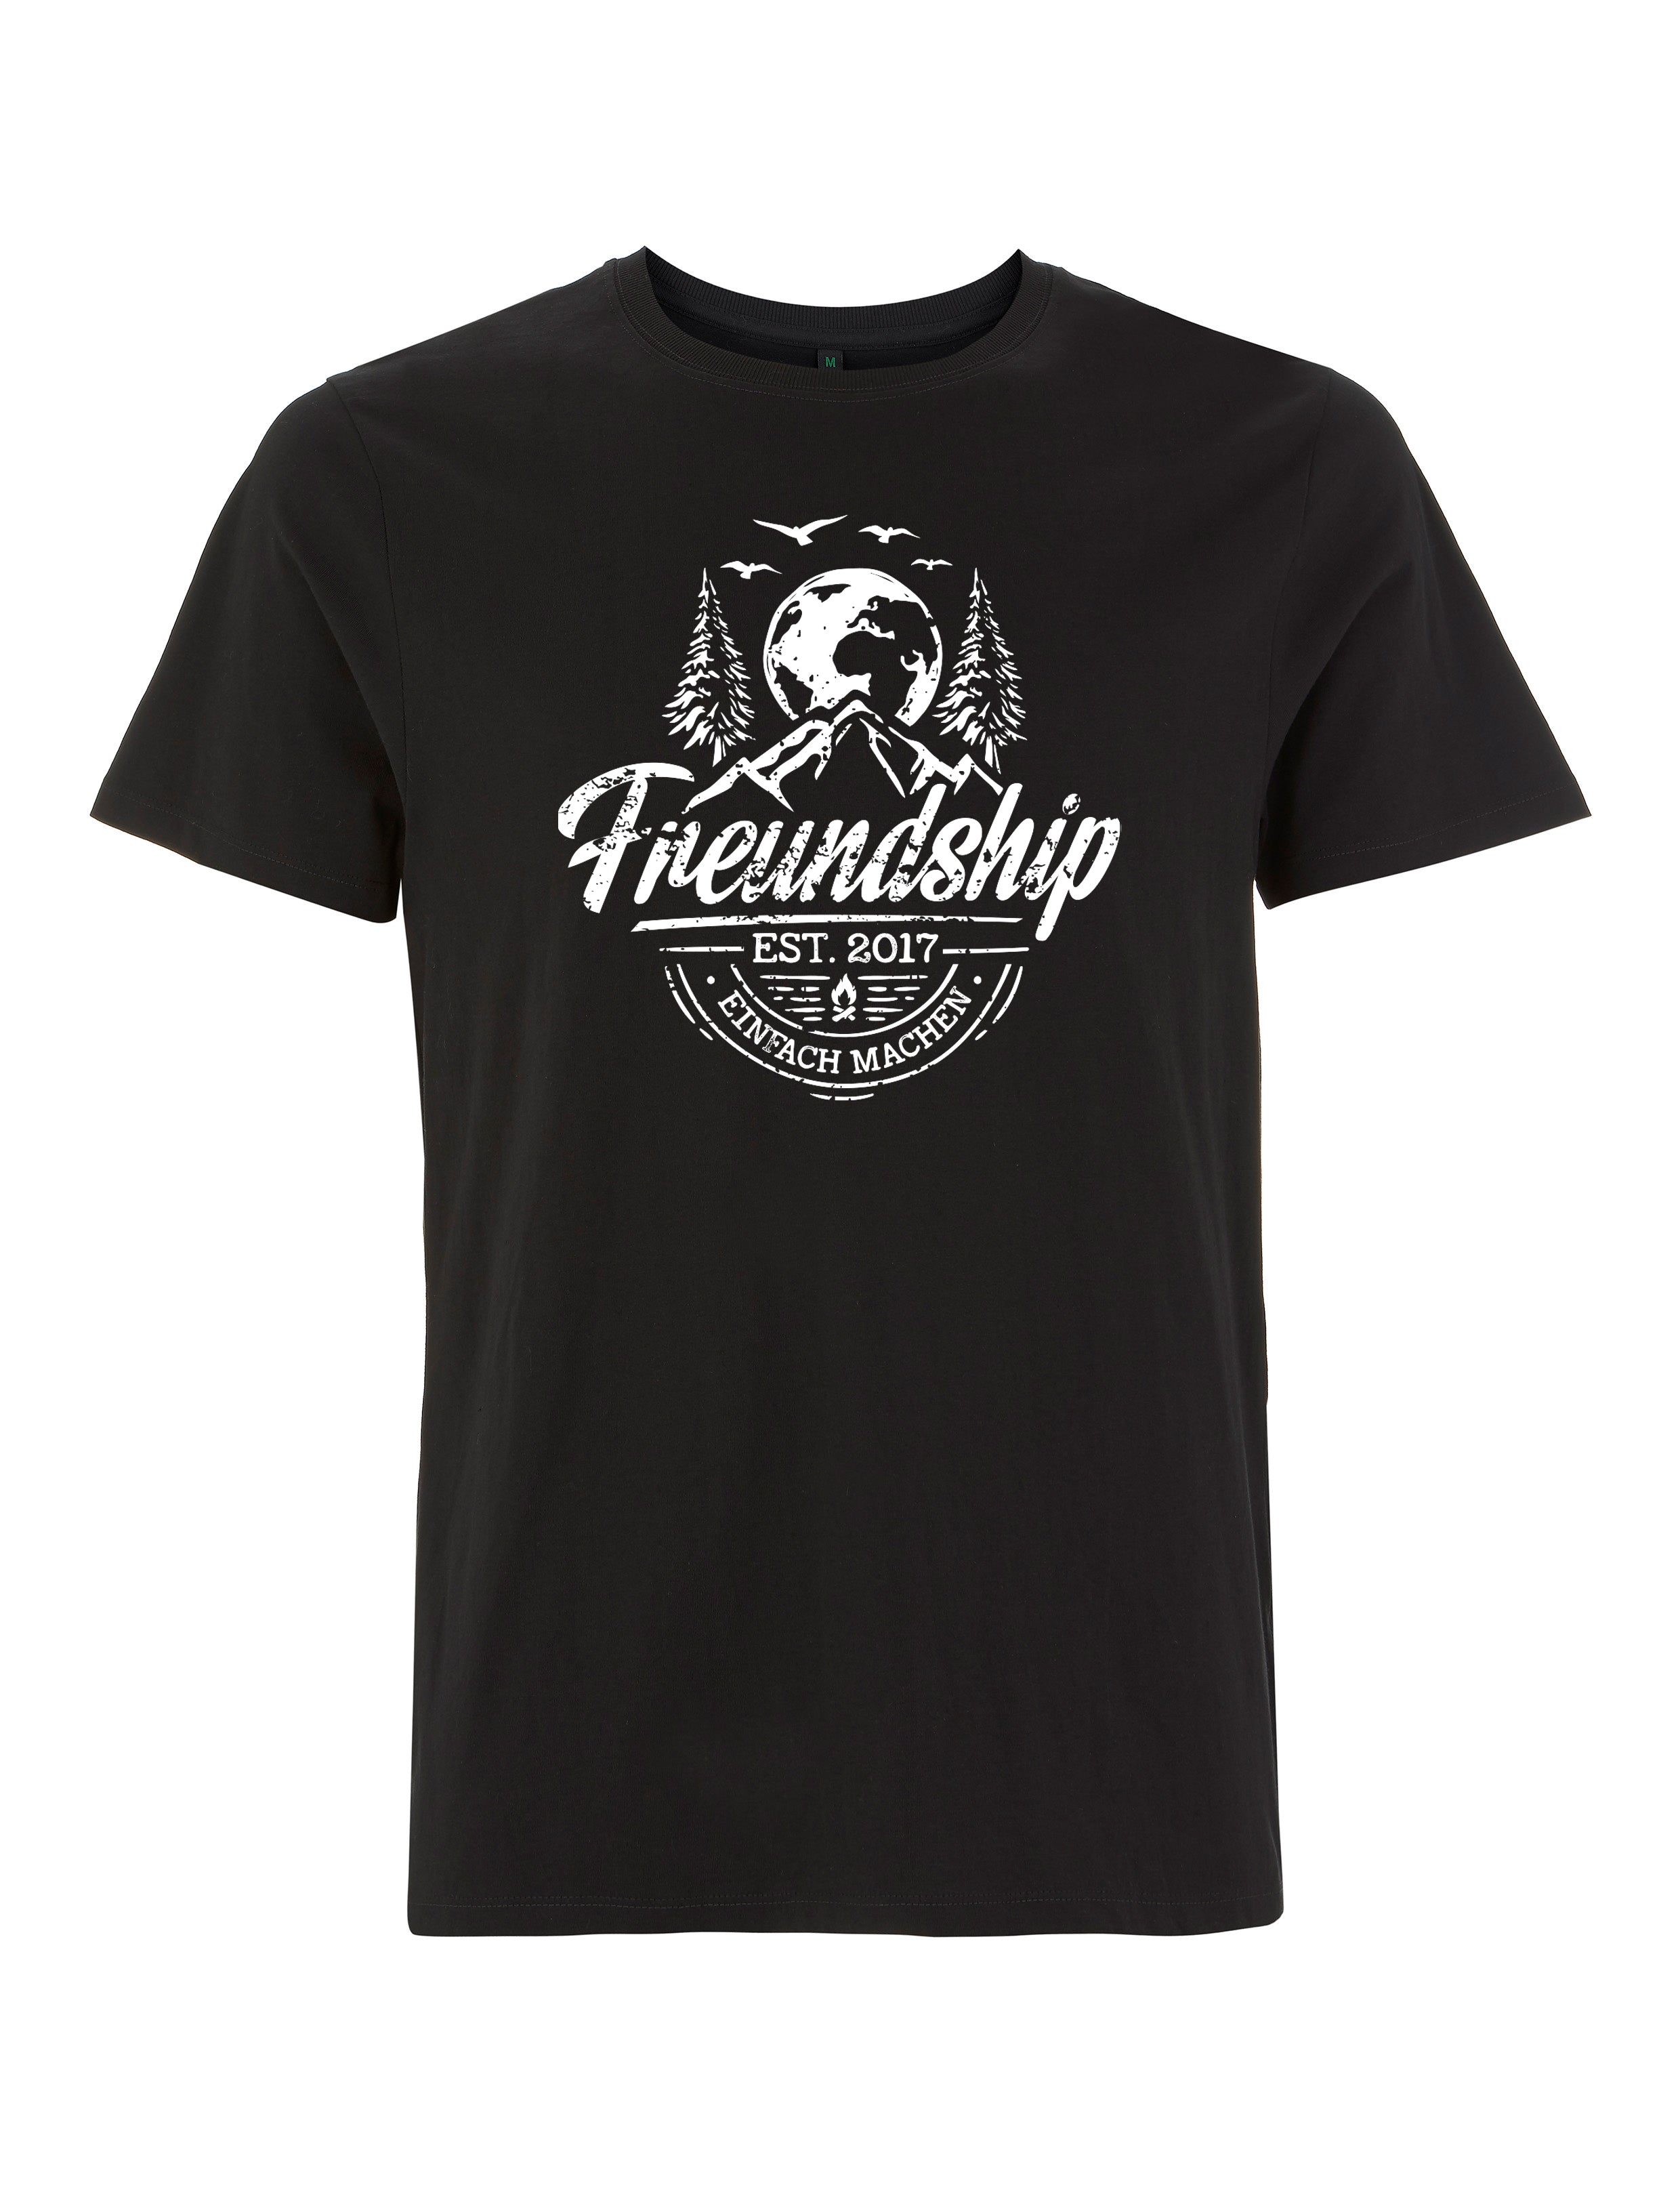 Freundship "einfach machen" Shirt